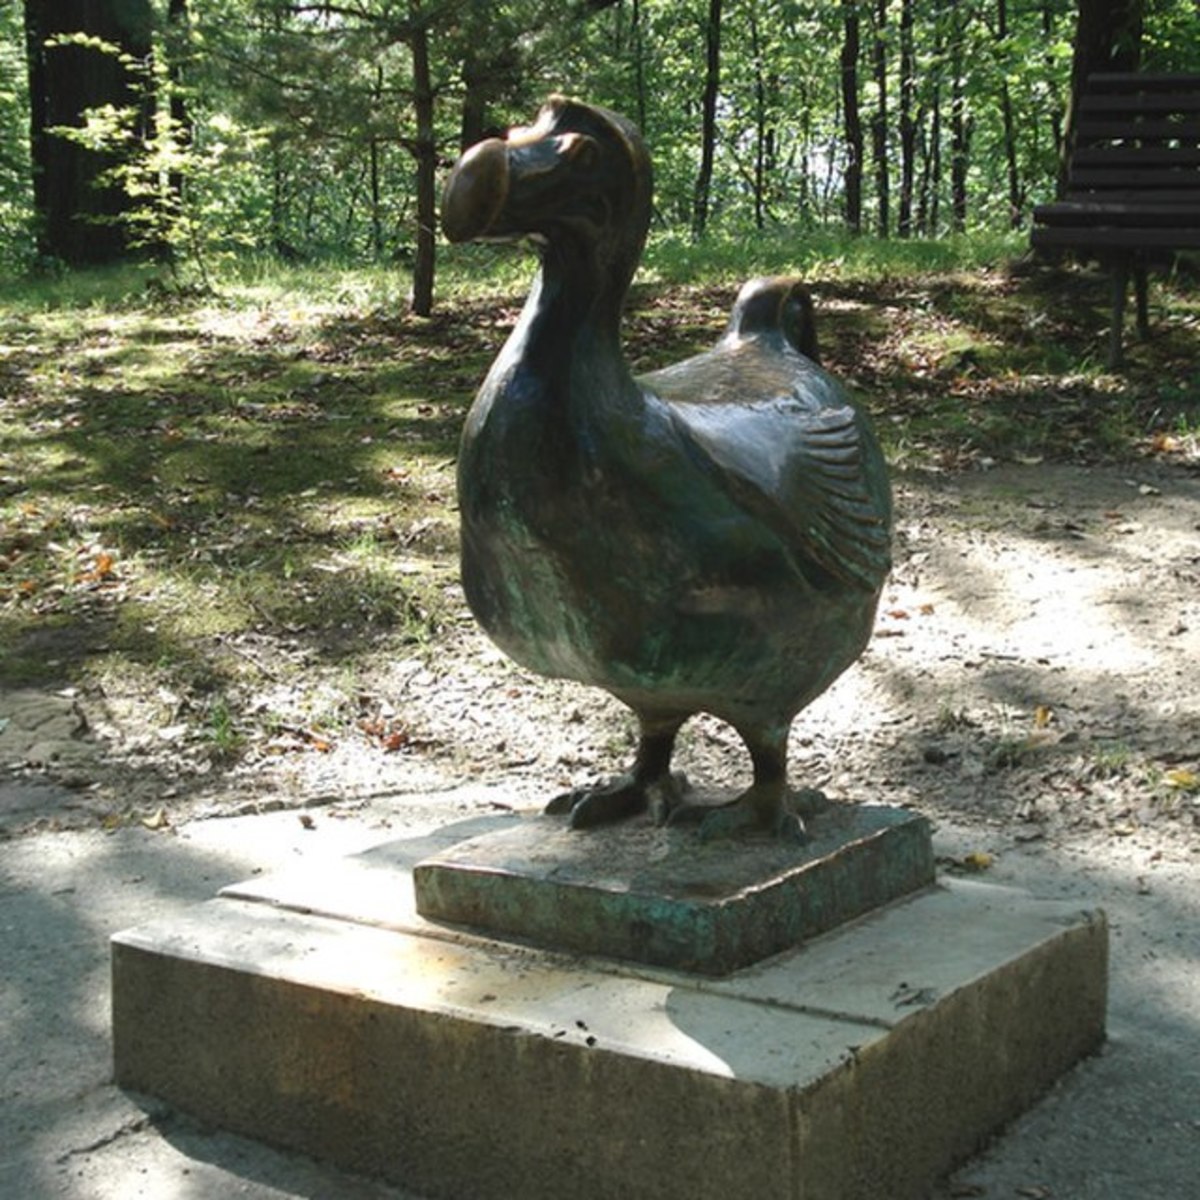 dodo-a-lost-bird